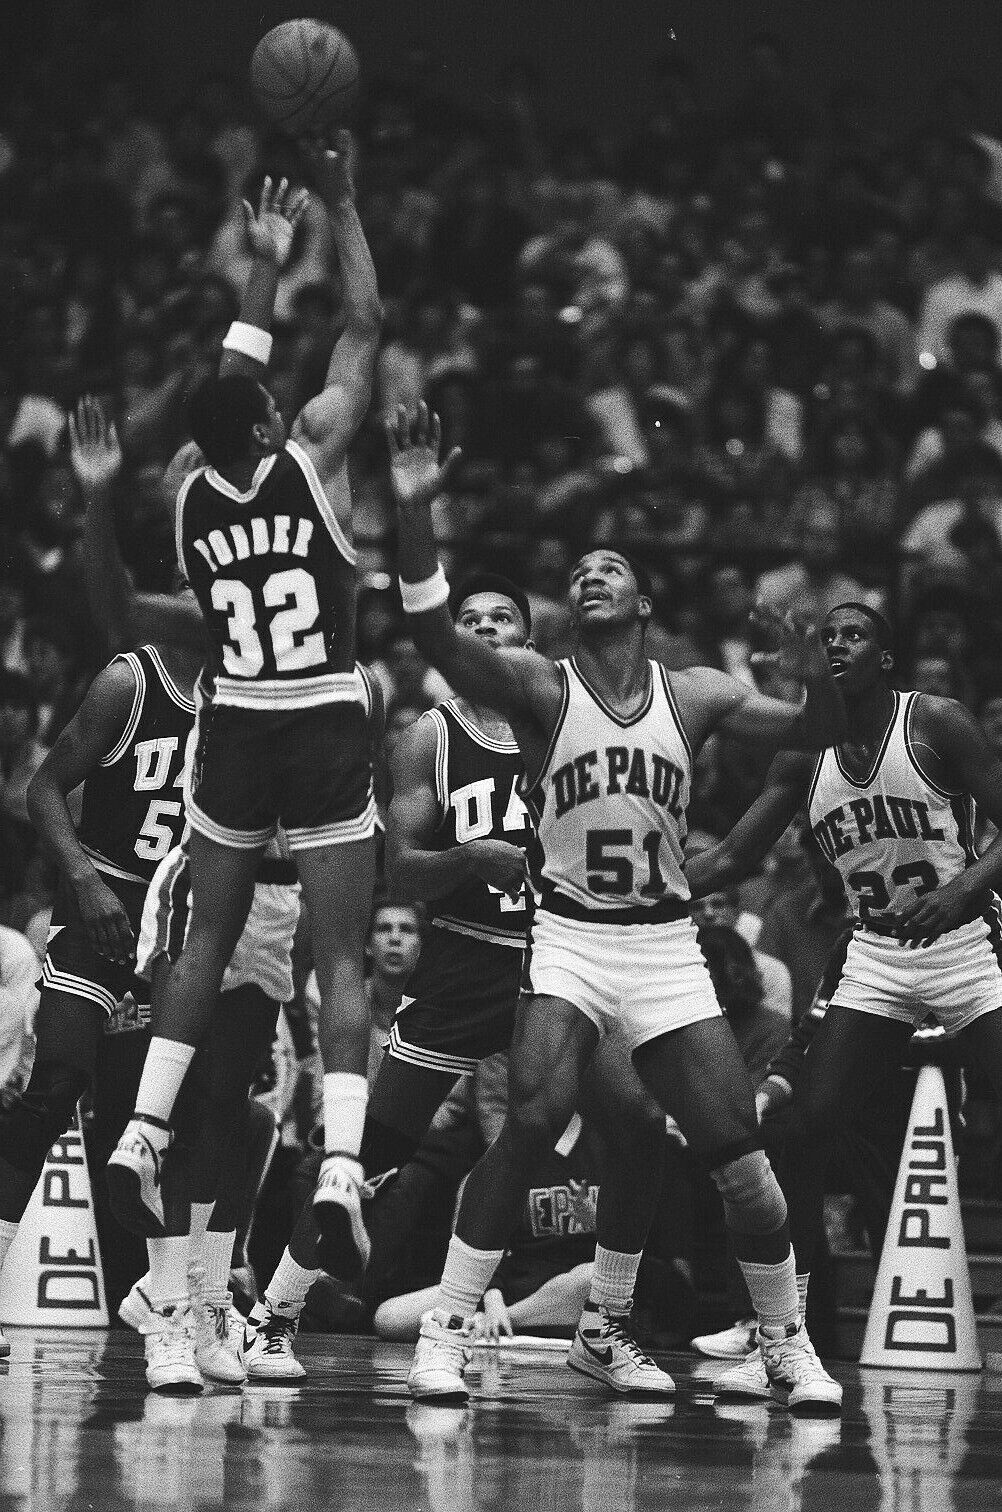 LD125-46 1986 College Basketball DePaul UAB Blazers (55) ORIG 35mm B&W NEGATIVES Без бренда - фотография #2